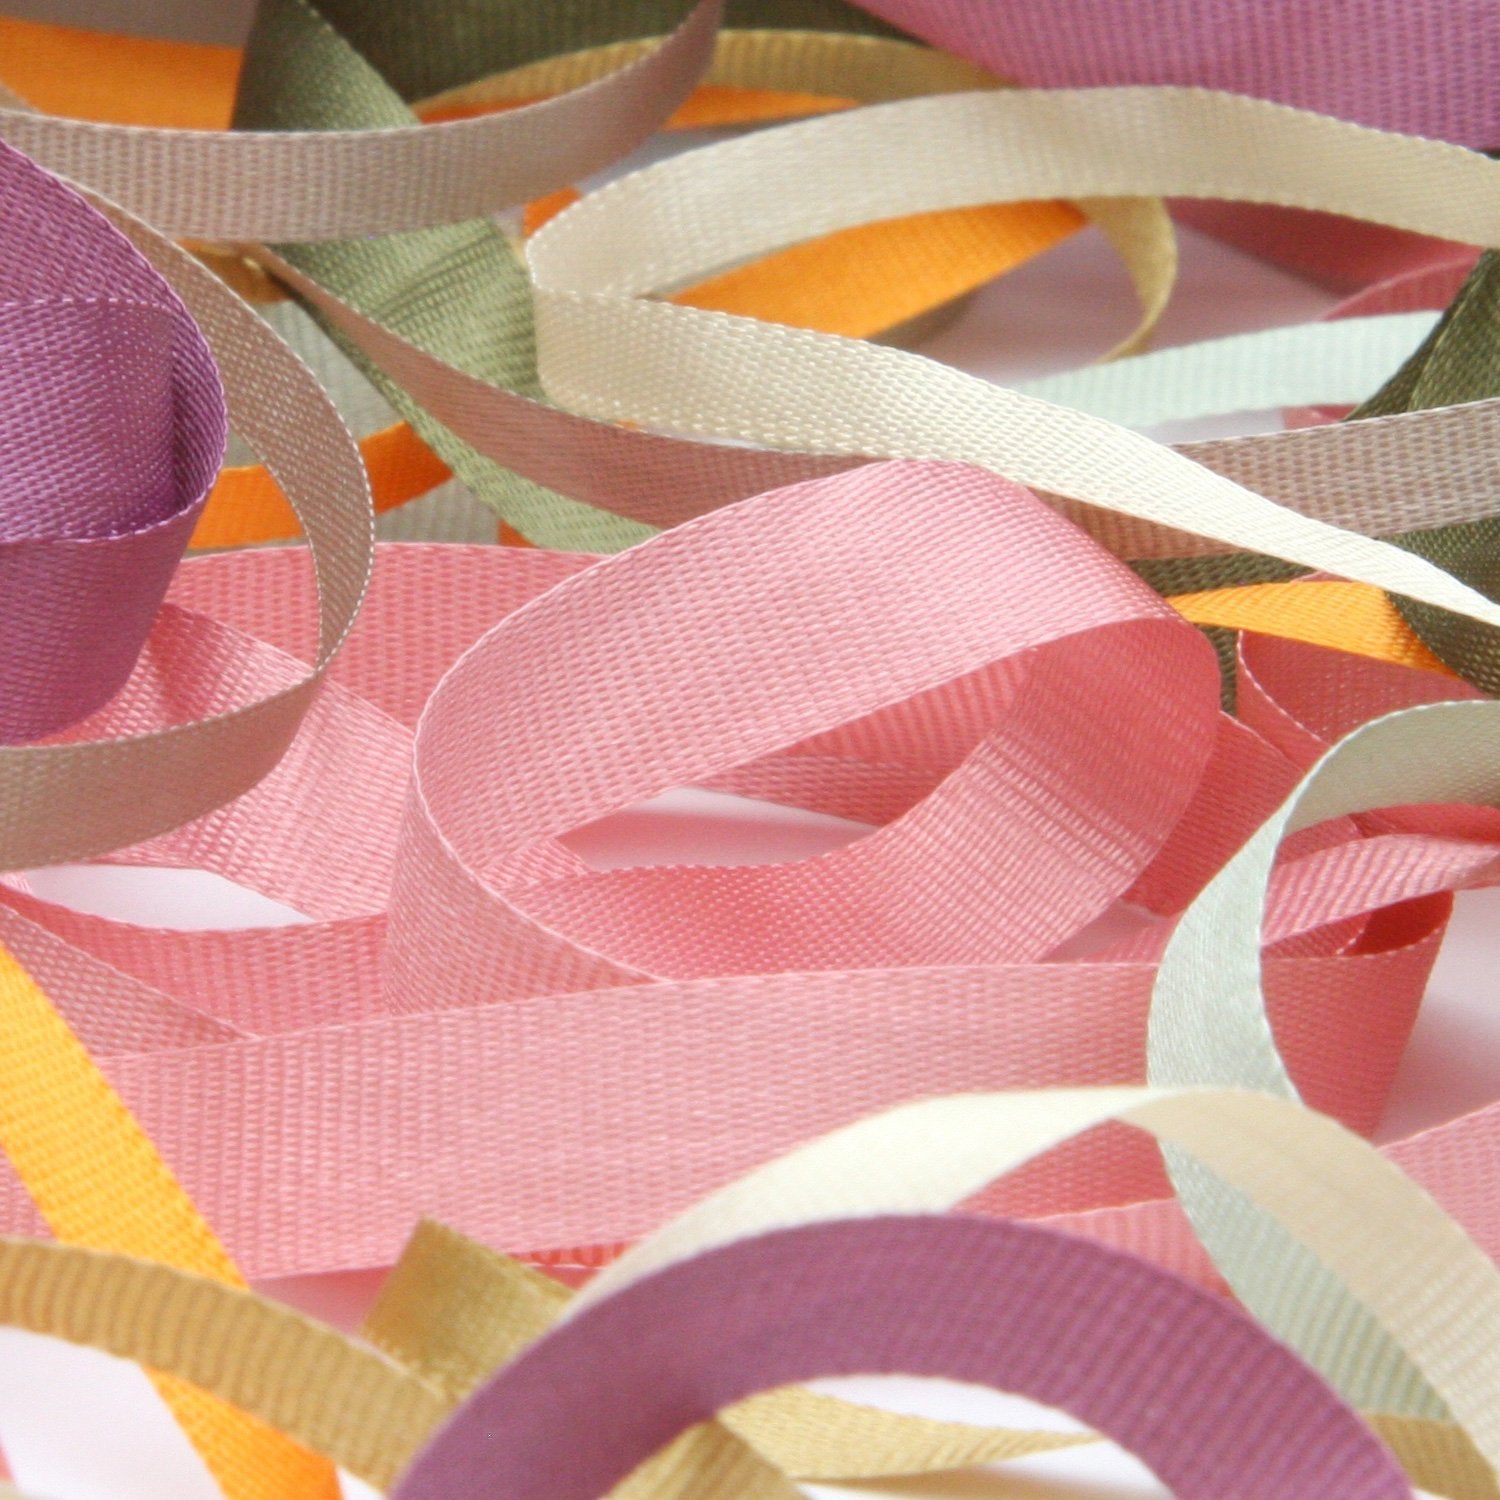 FUJIYAMA RIBBON [Wholesale] Embroidery Ribbon 7mm 200 Meters Roll